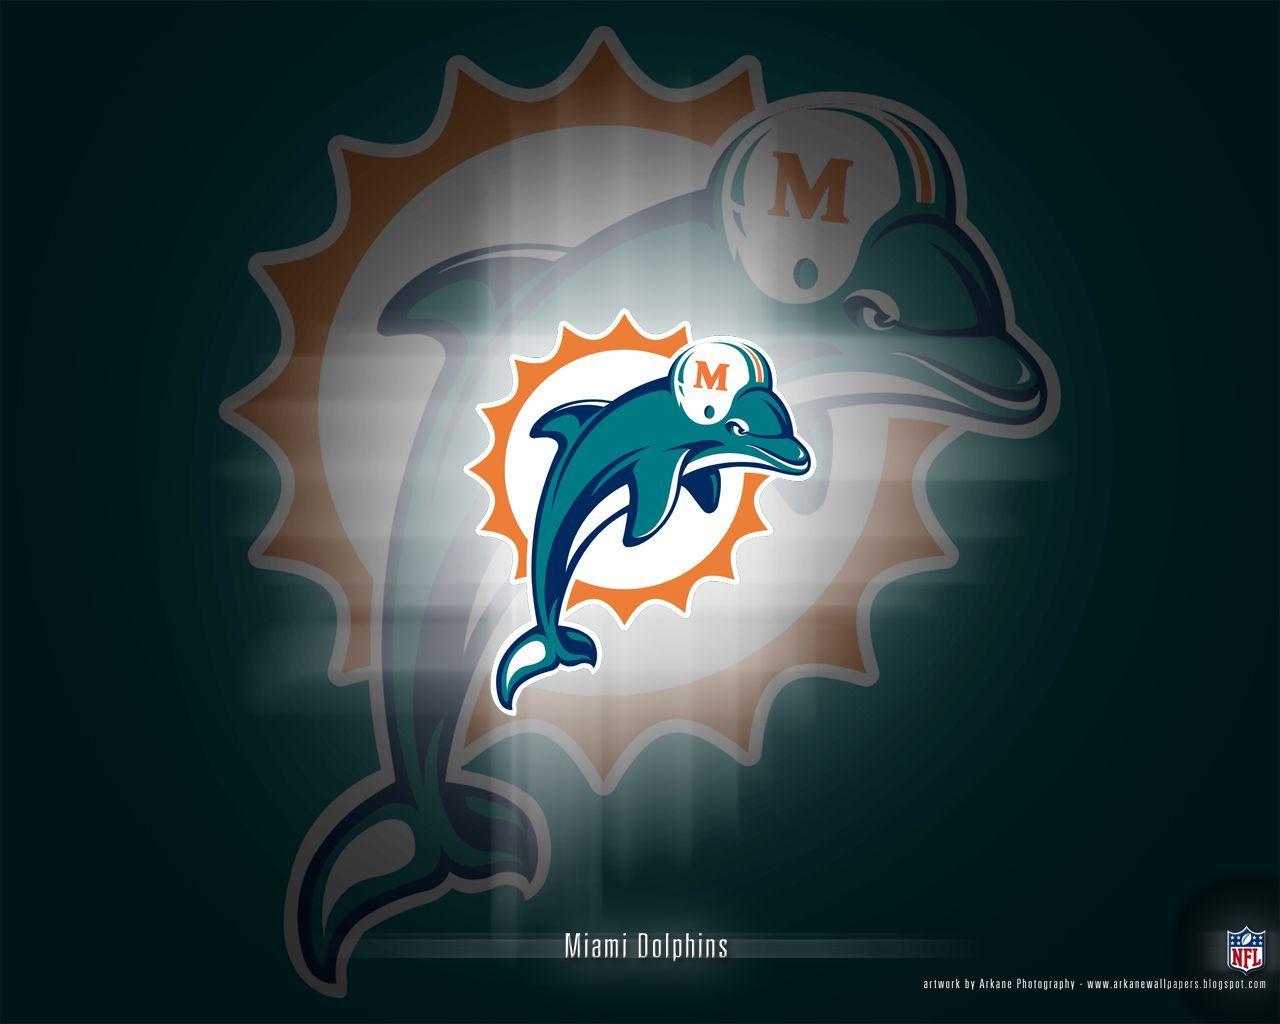 Miami Dolphins HD wallpaper. Miami Dolphins wallpaper